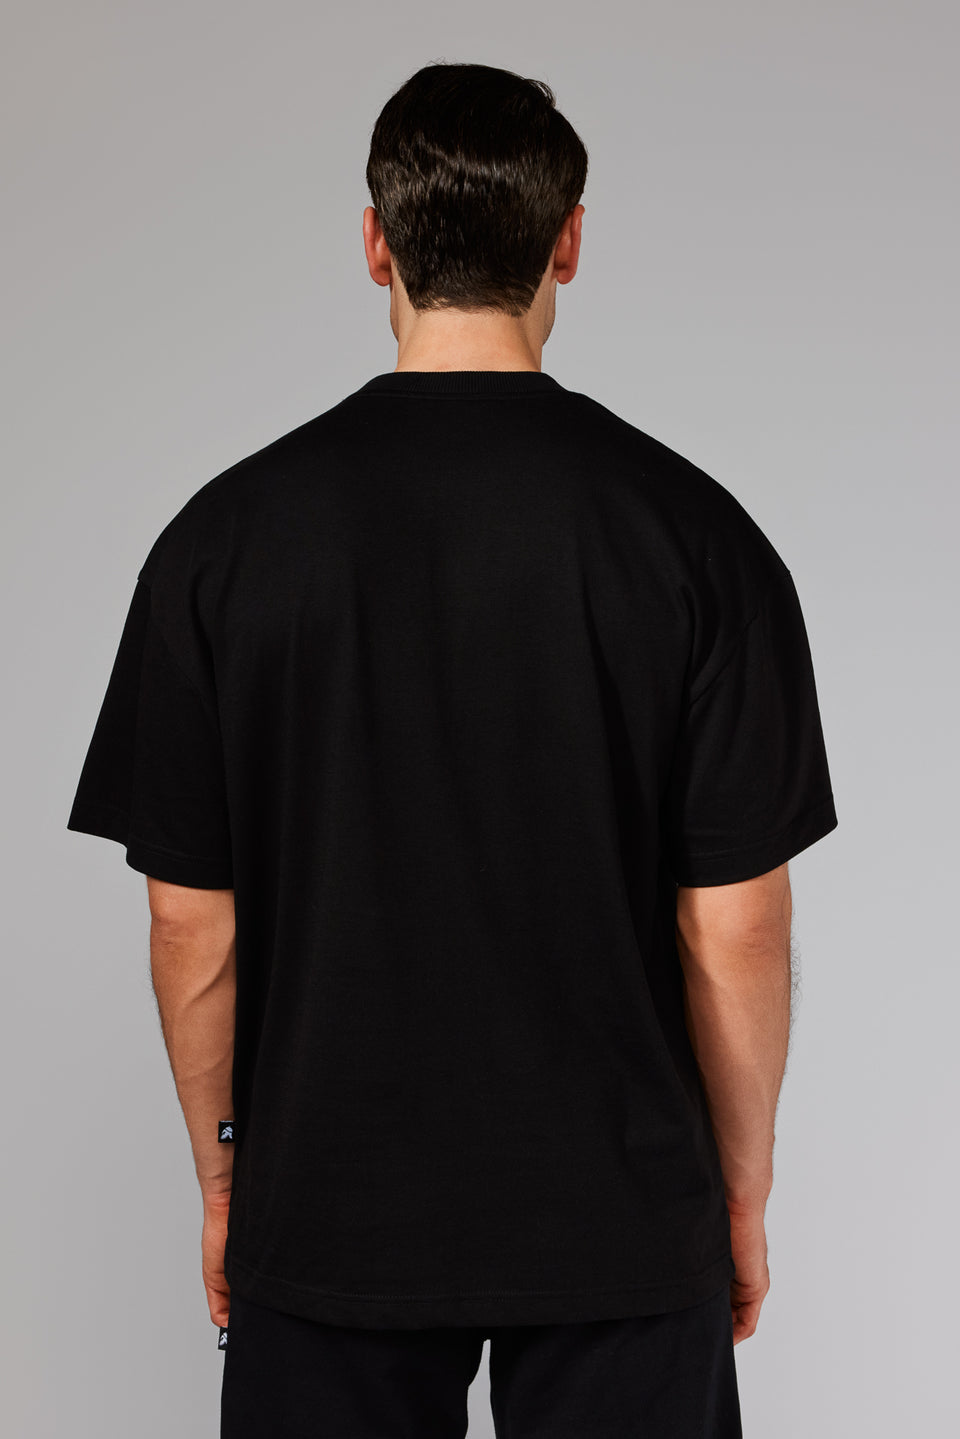 Illyrian Classical T-Shirt - Black